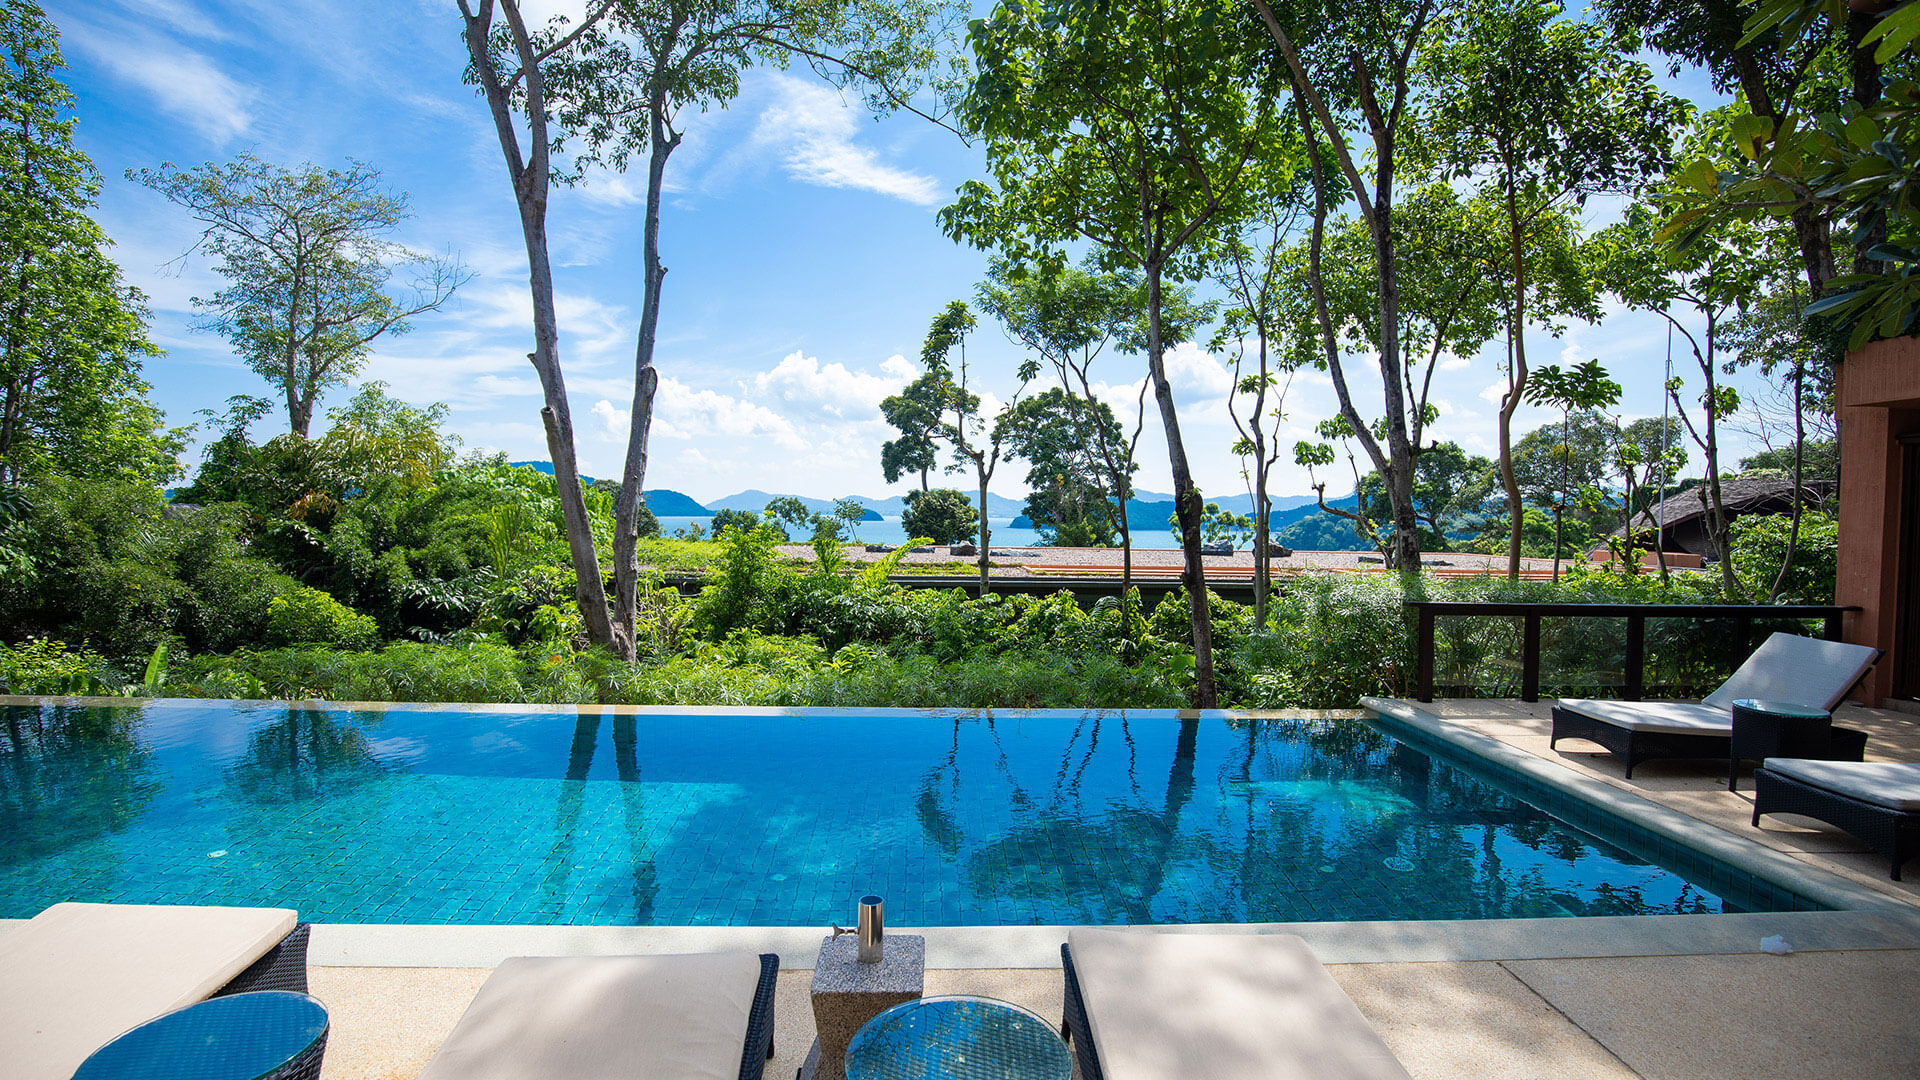 3 bedroom residence villa partial ocean view luxury hotel resort phuket